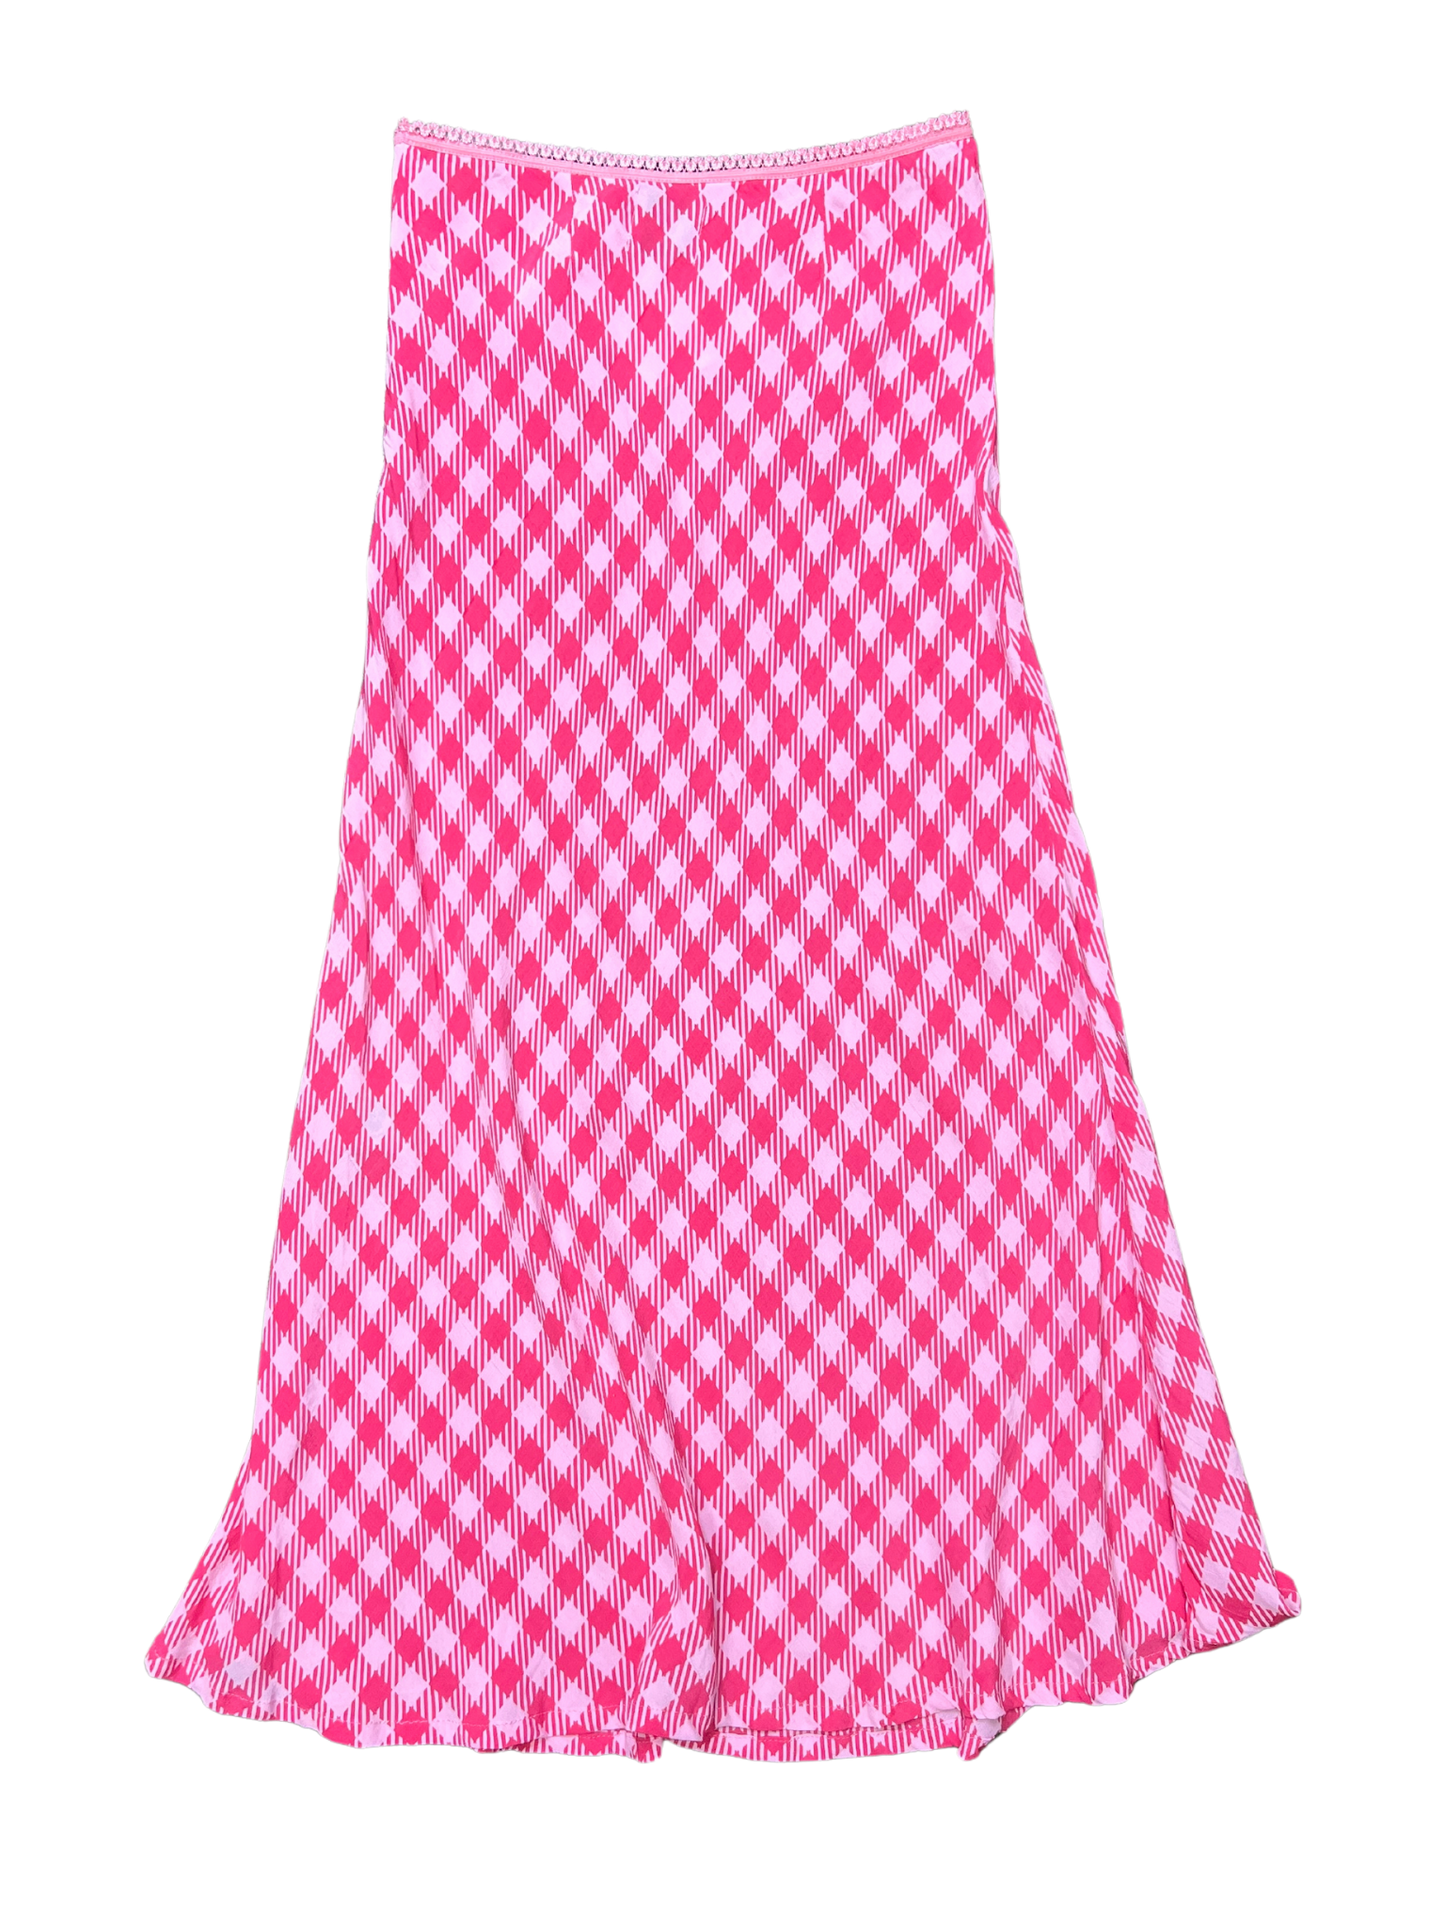 Size S - Emma Mulholland on Holiday Pink Diamond Skirt